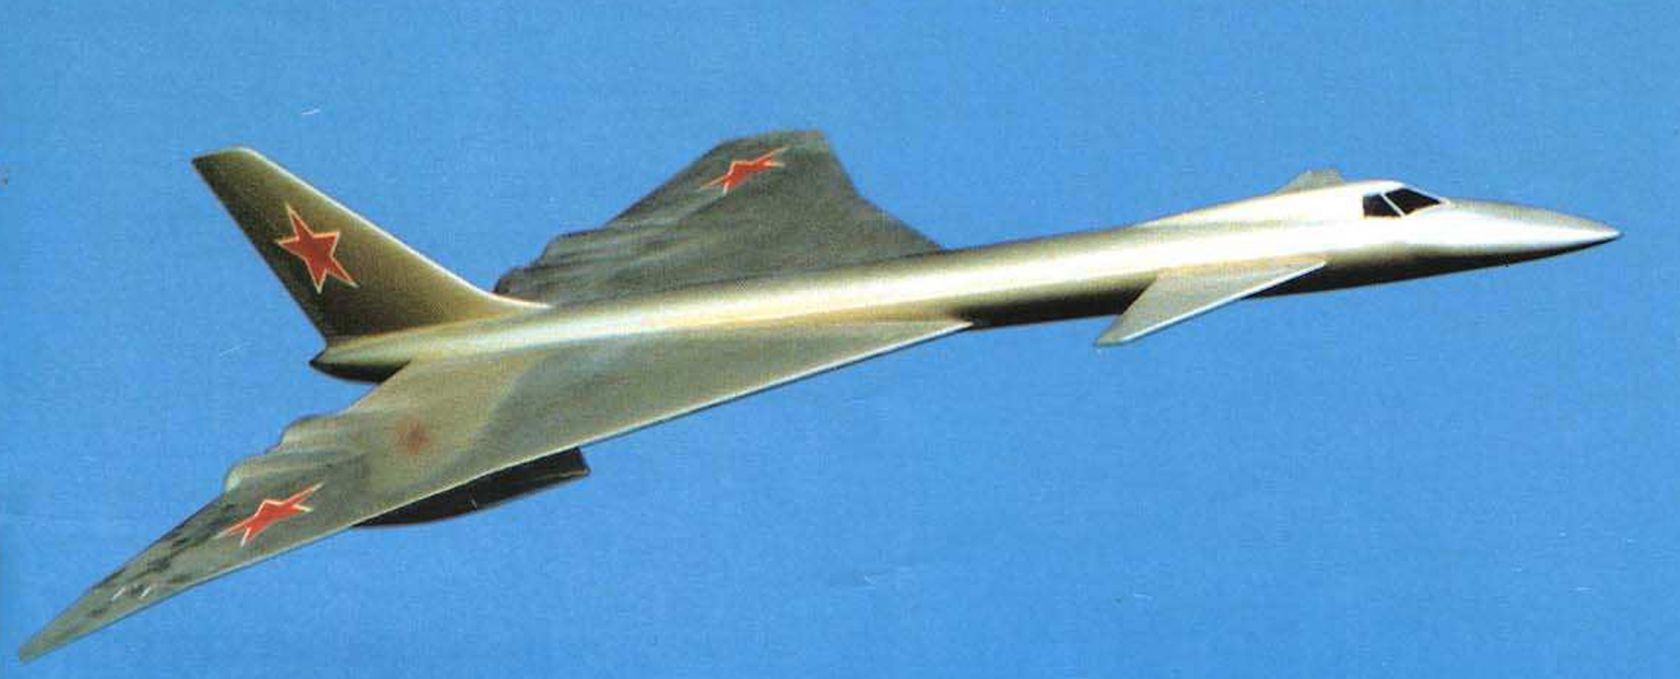 Проект стратегического ракетоносца «135» (Ту-135). СССР ...